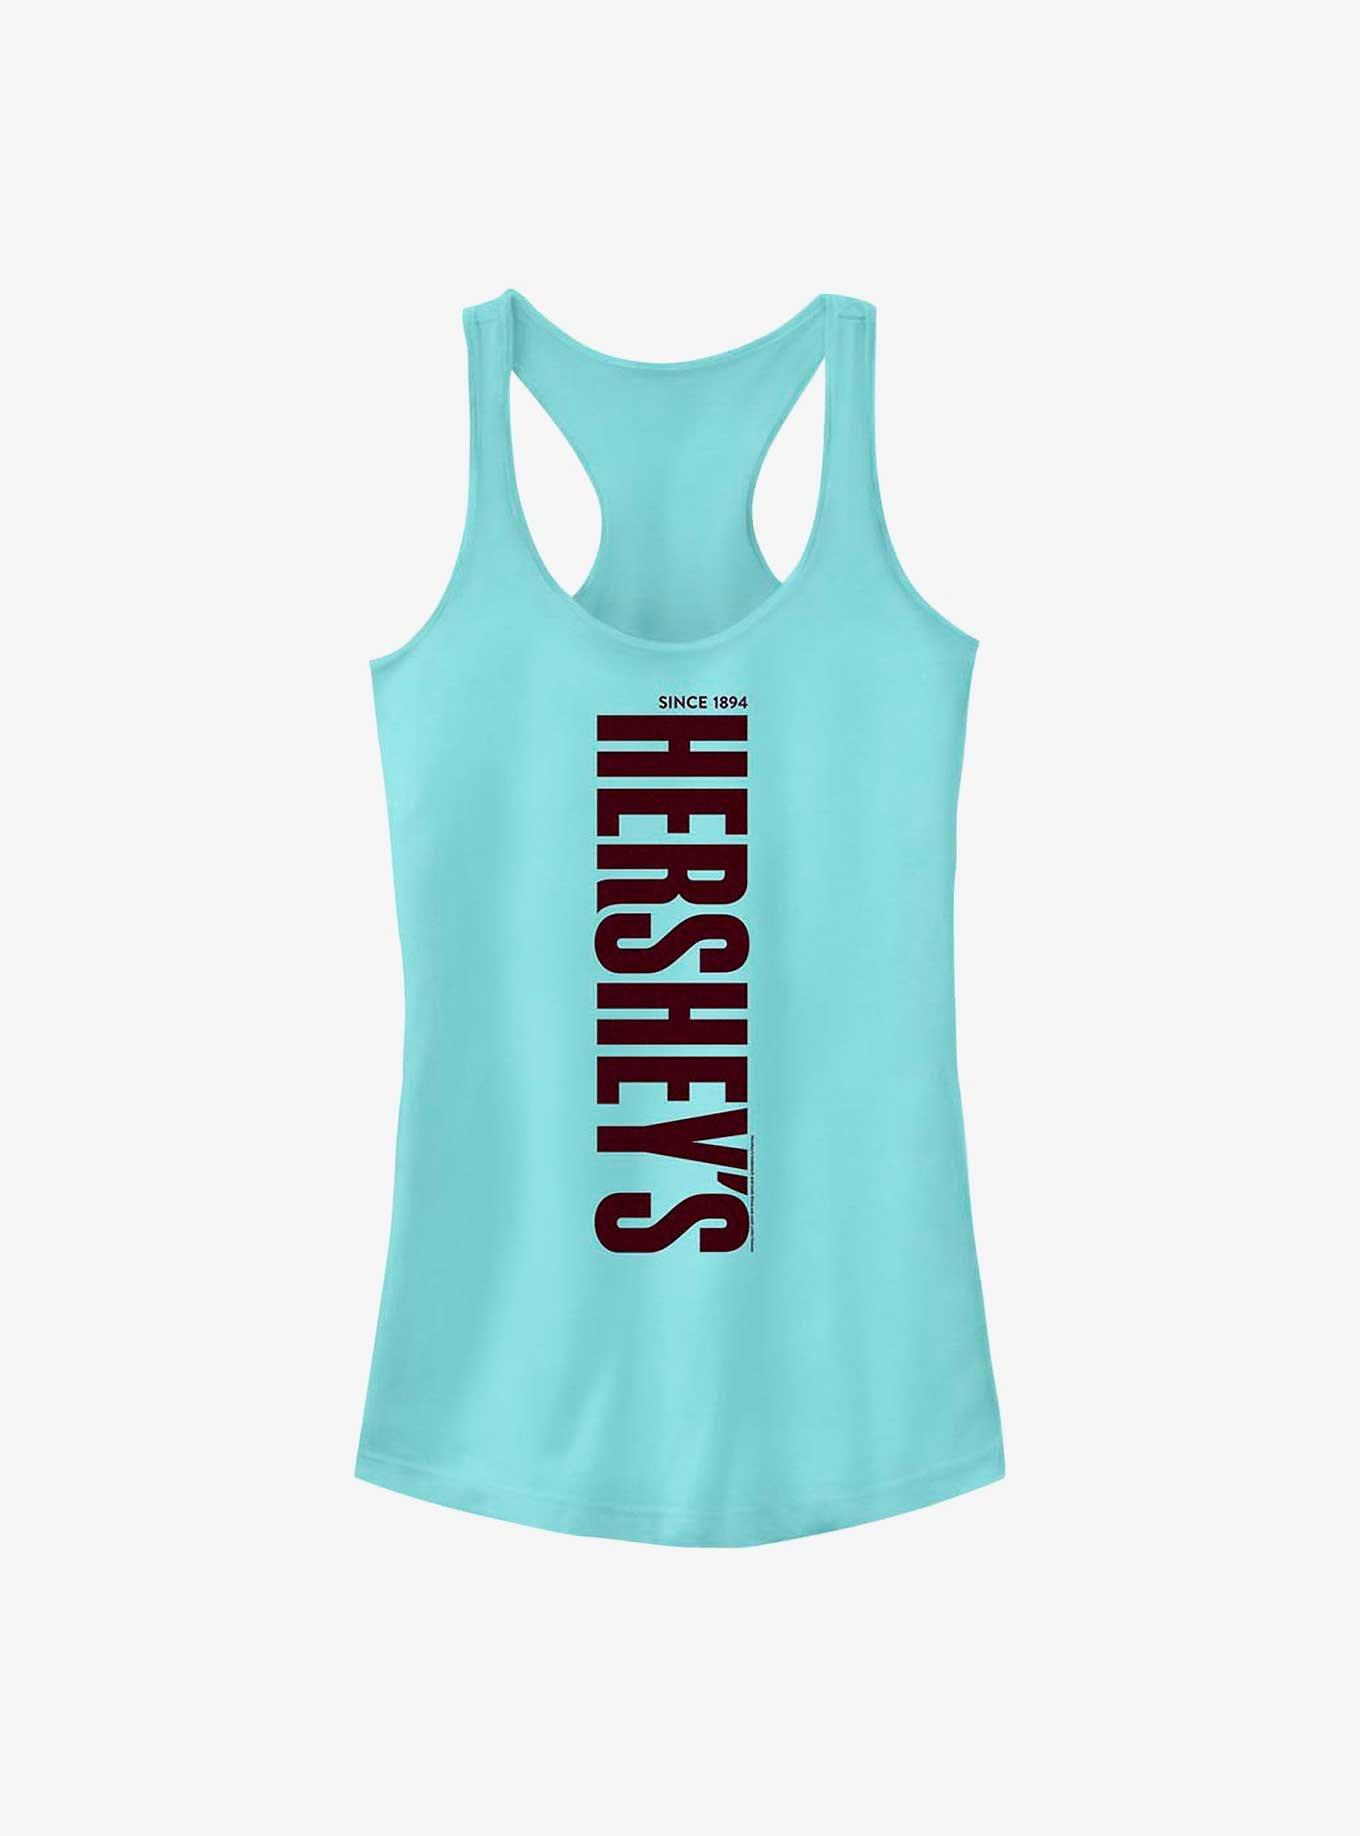 Hershey's Logo Girls Tank